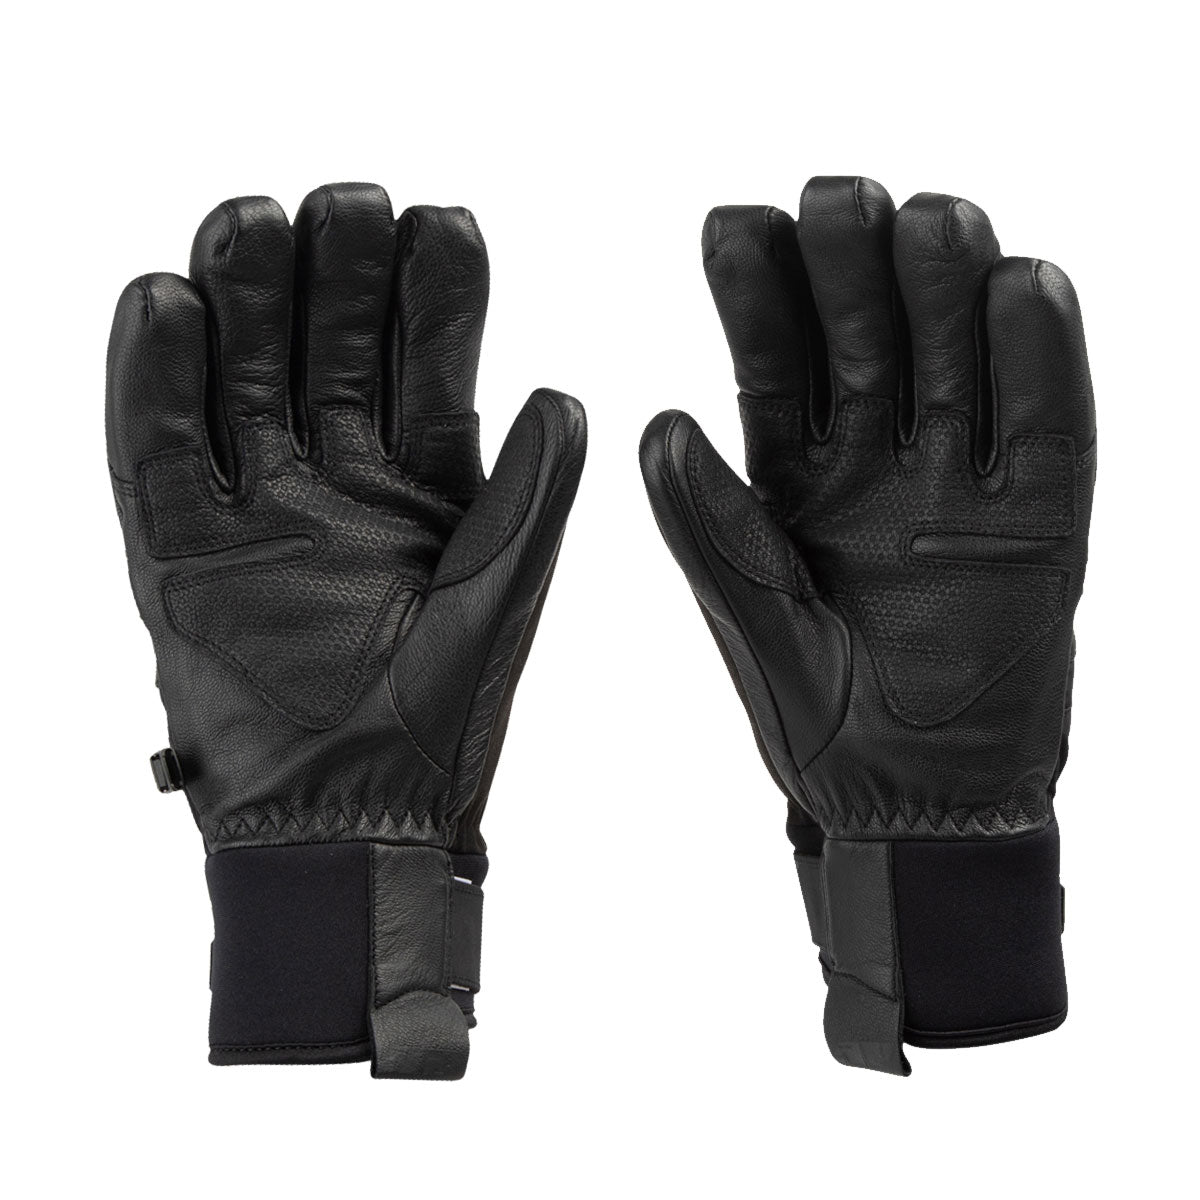 Free Range Gloves